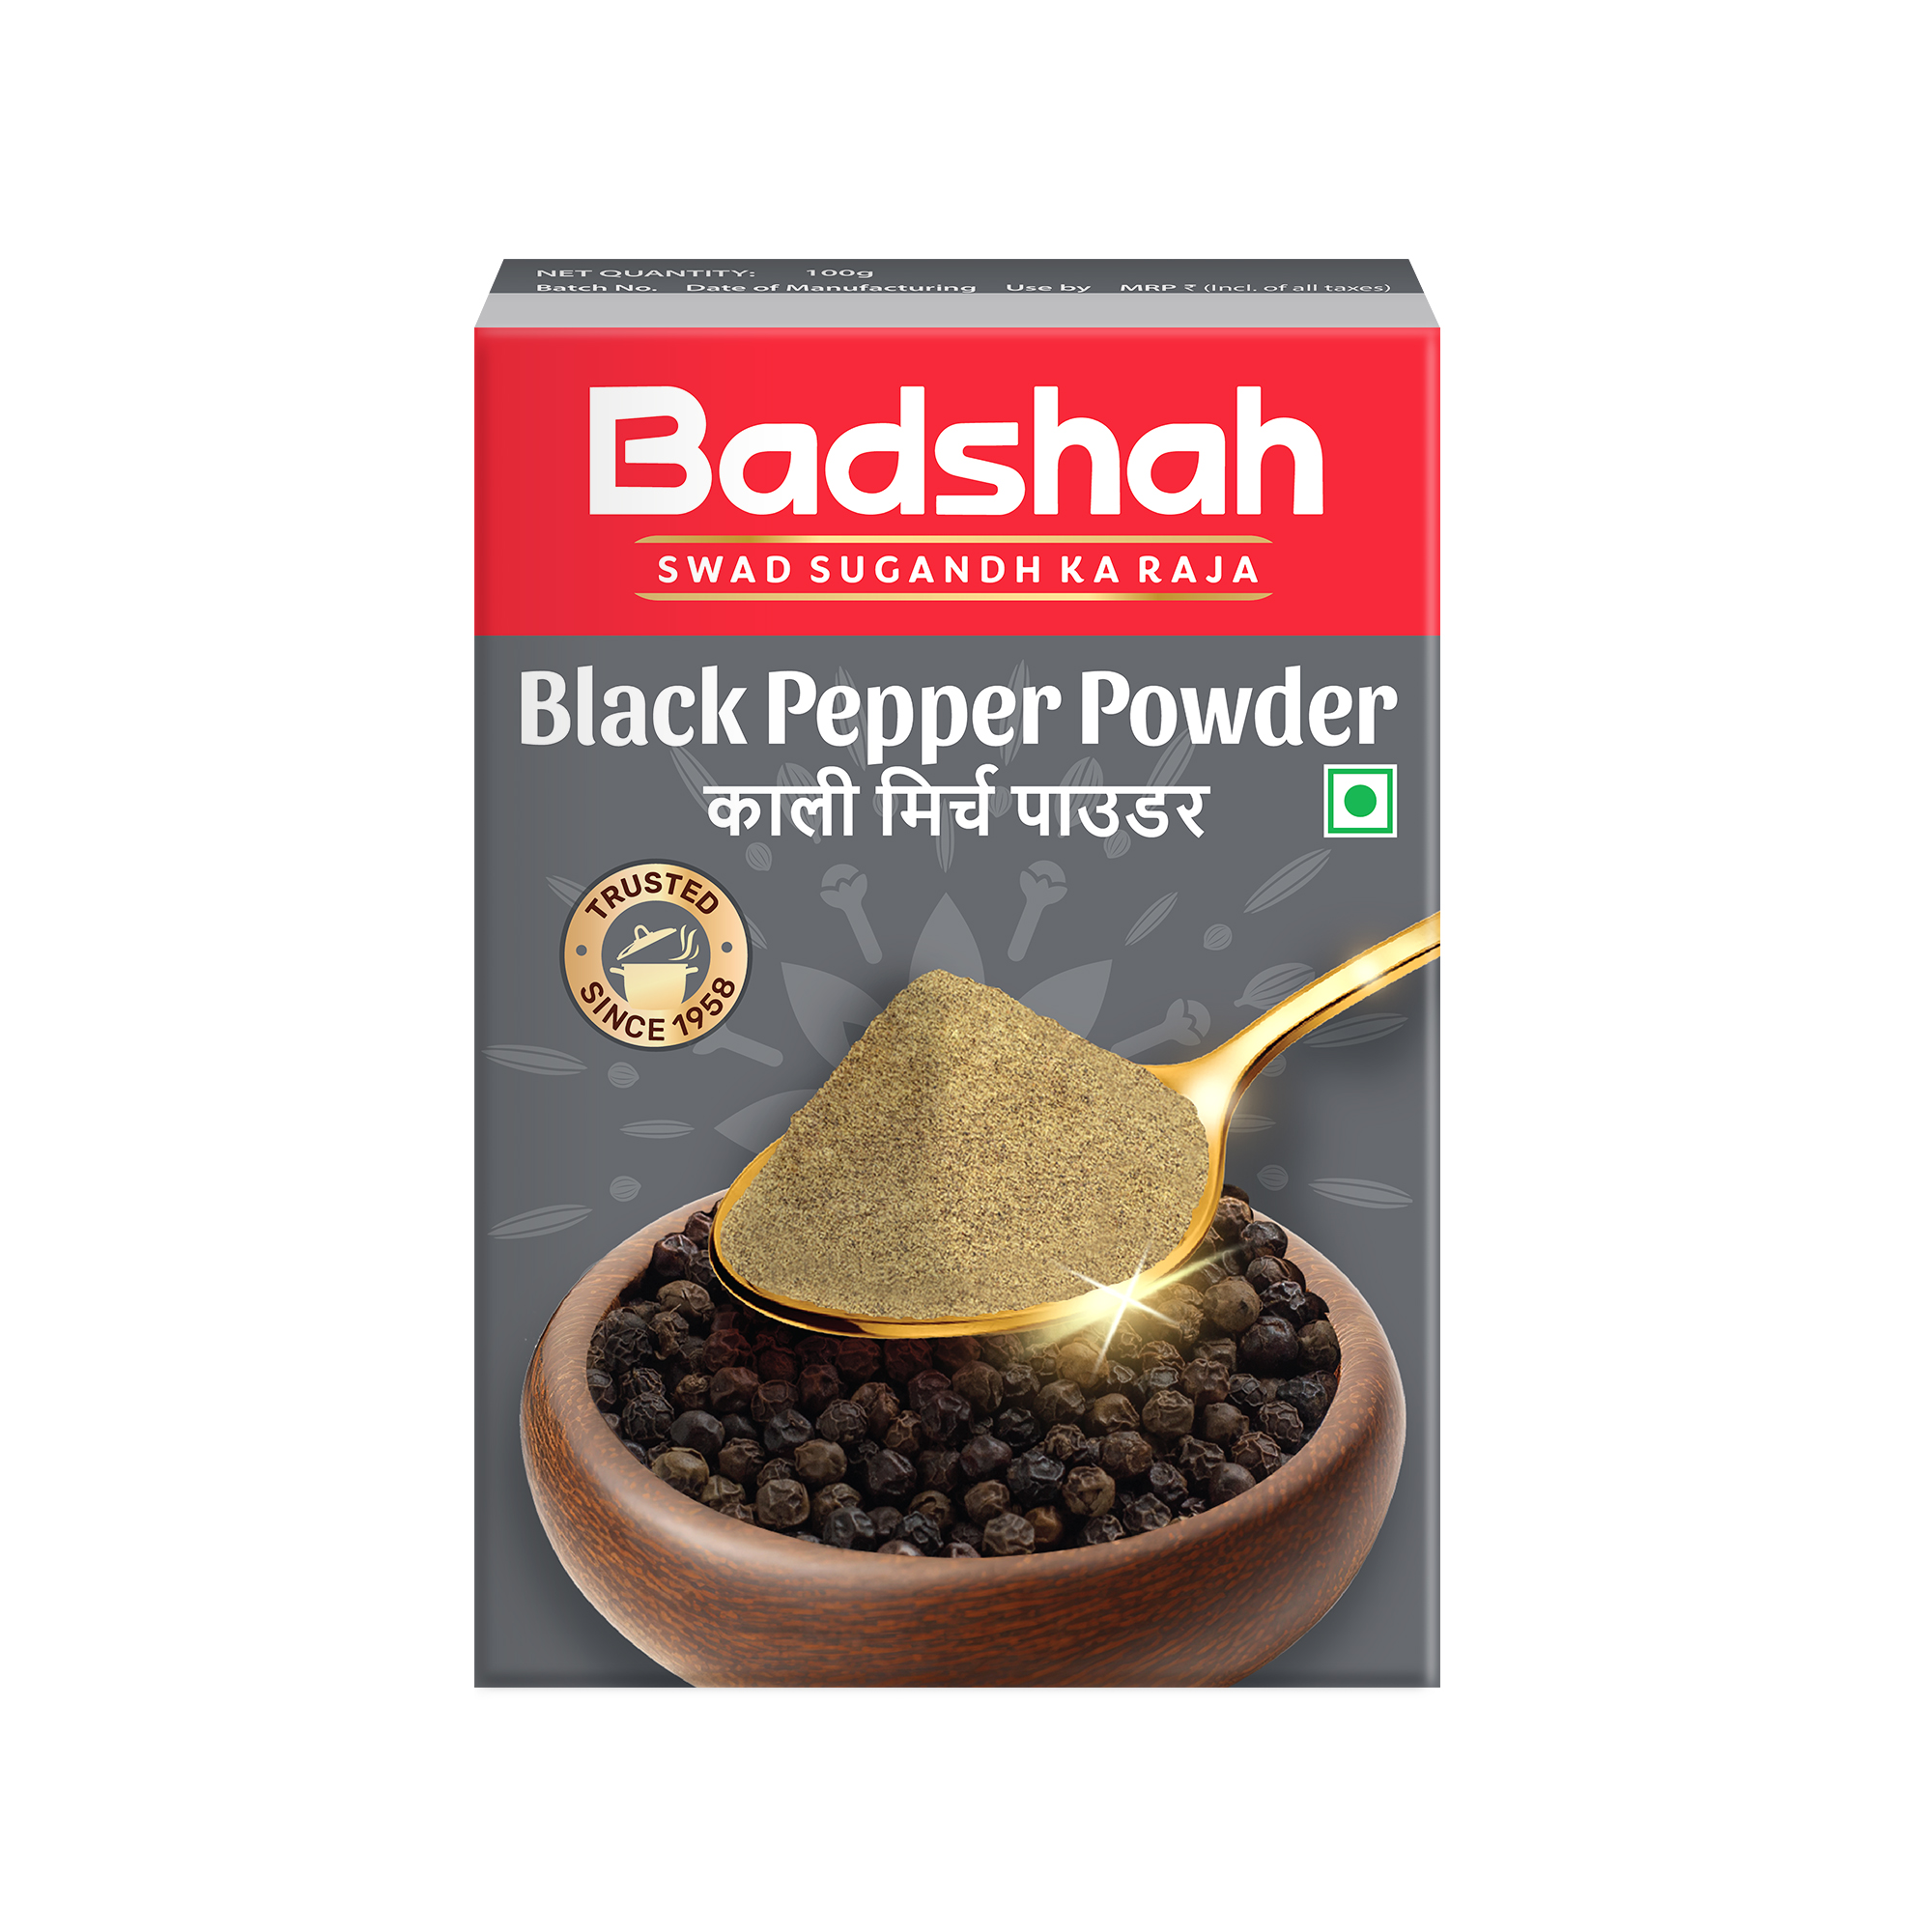 Badshah Black Pepper Powder |